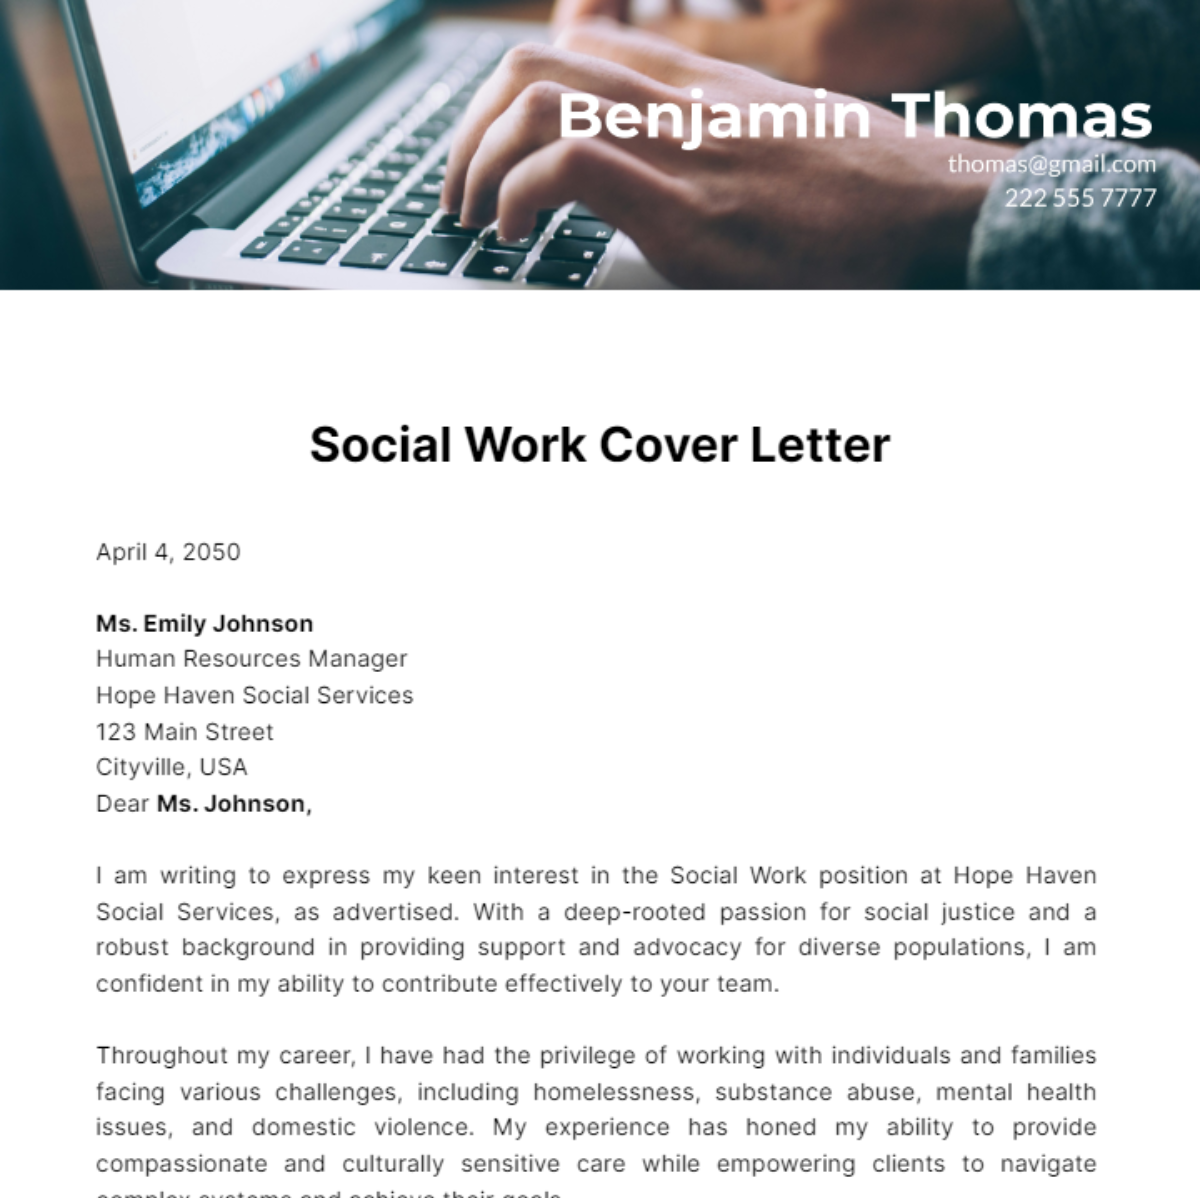 Social Work Cover Letter Template